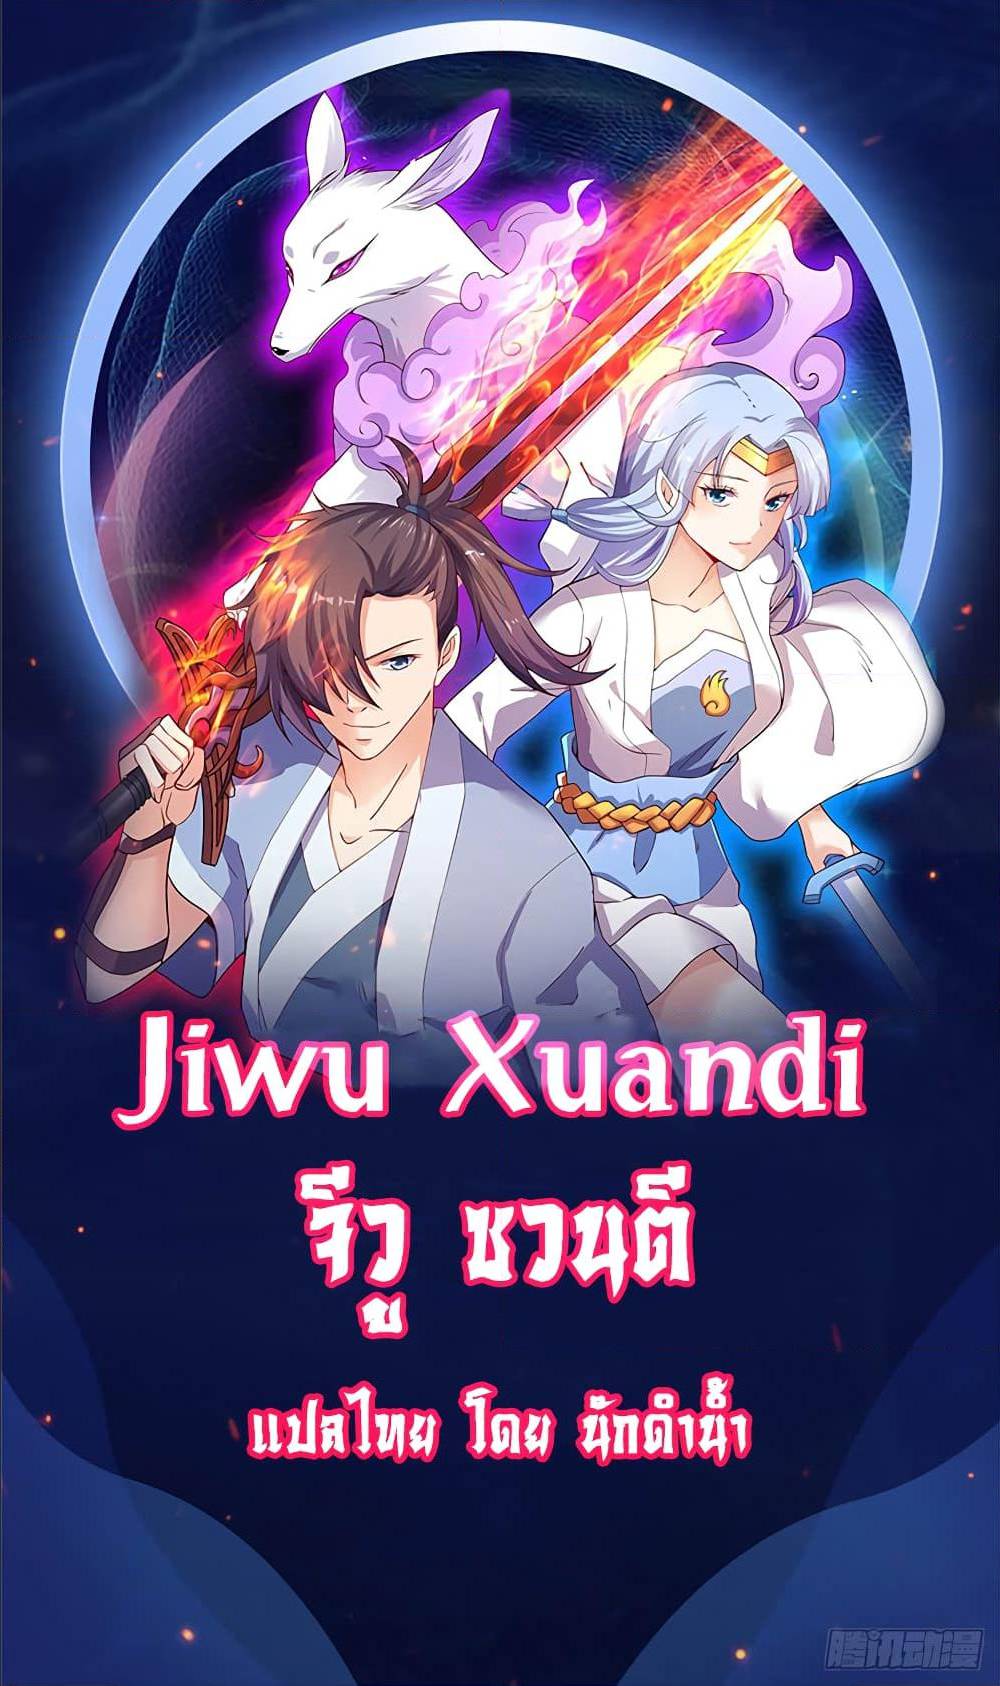 Jiwu Xuandi 45 (1)